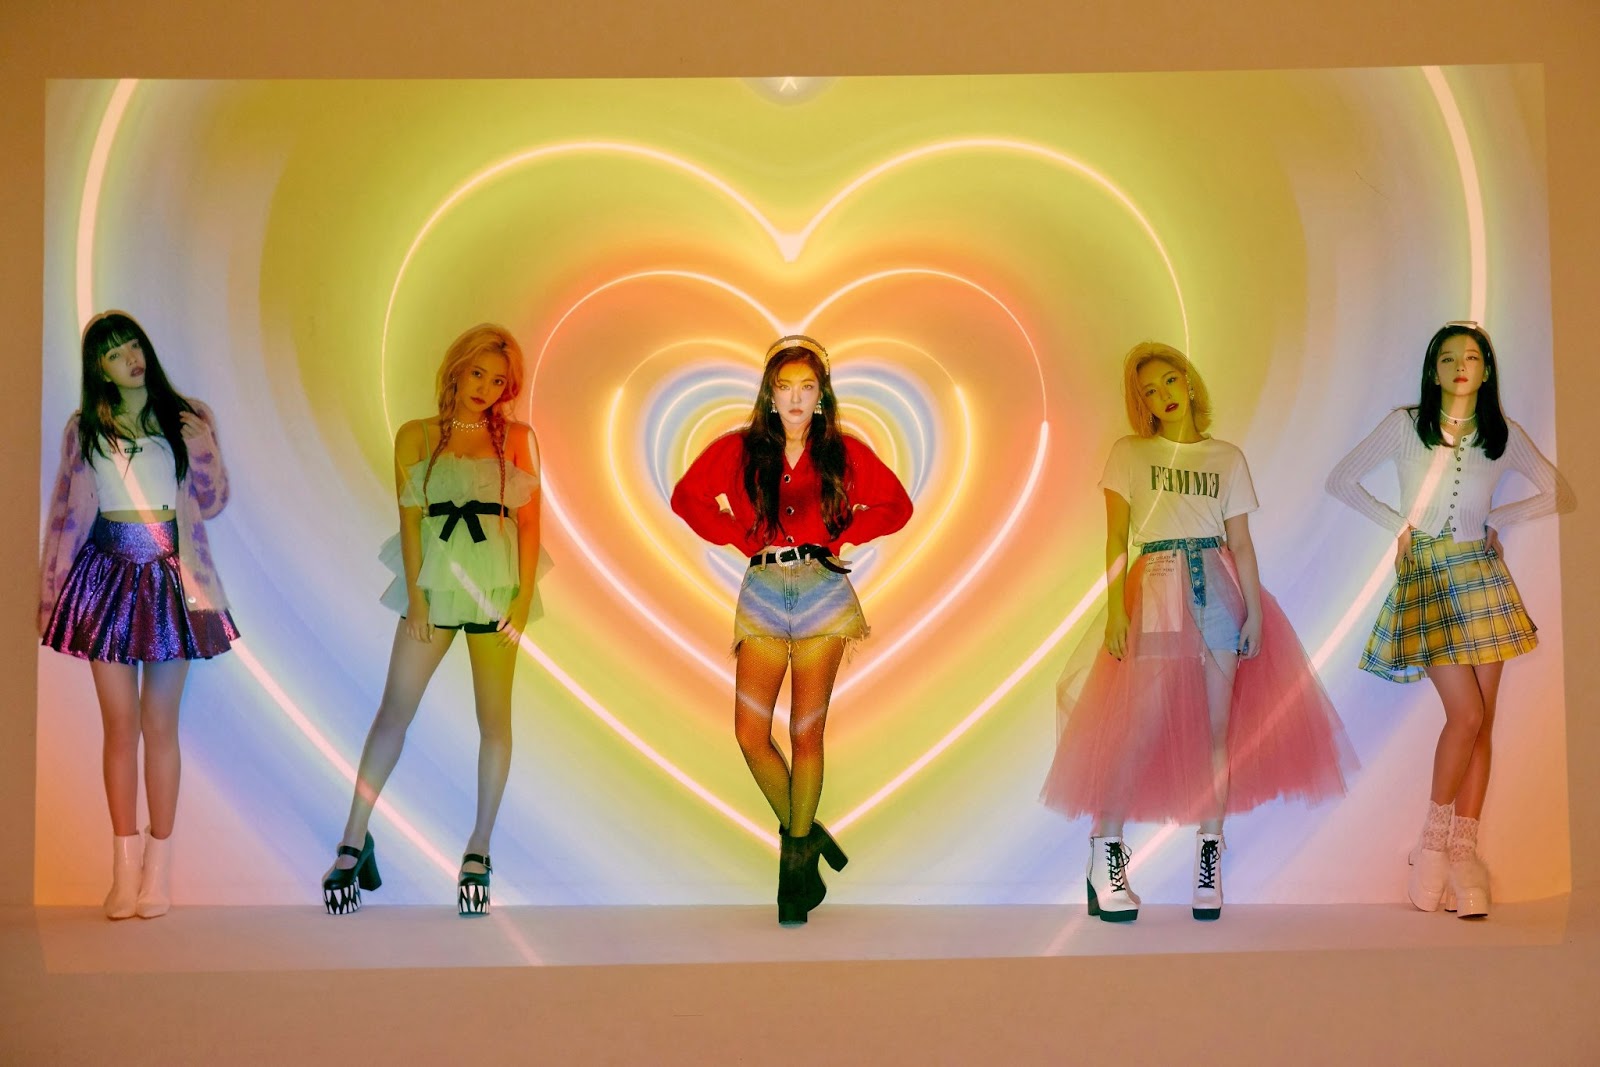 'Psycho' is Fastest Red Velvet MV to Reach 100 Million Views